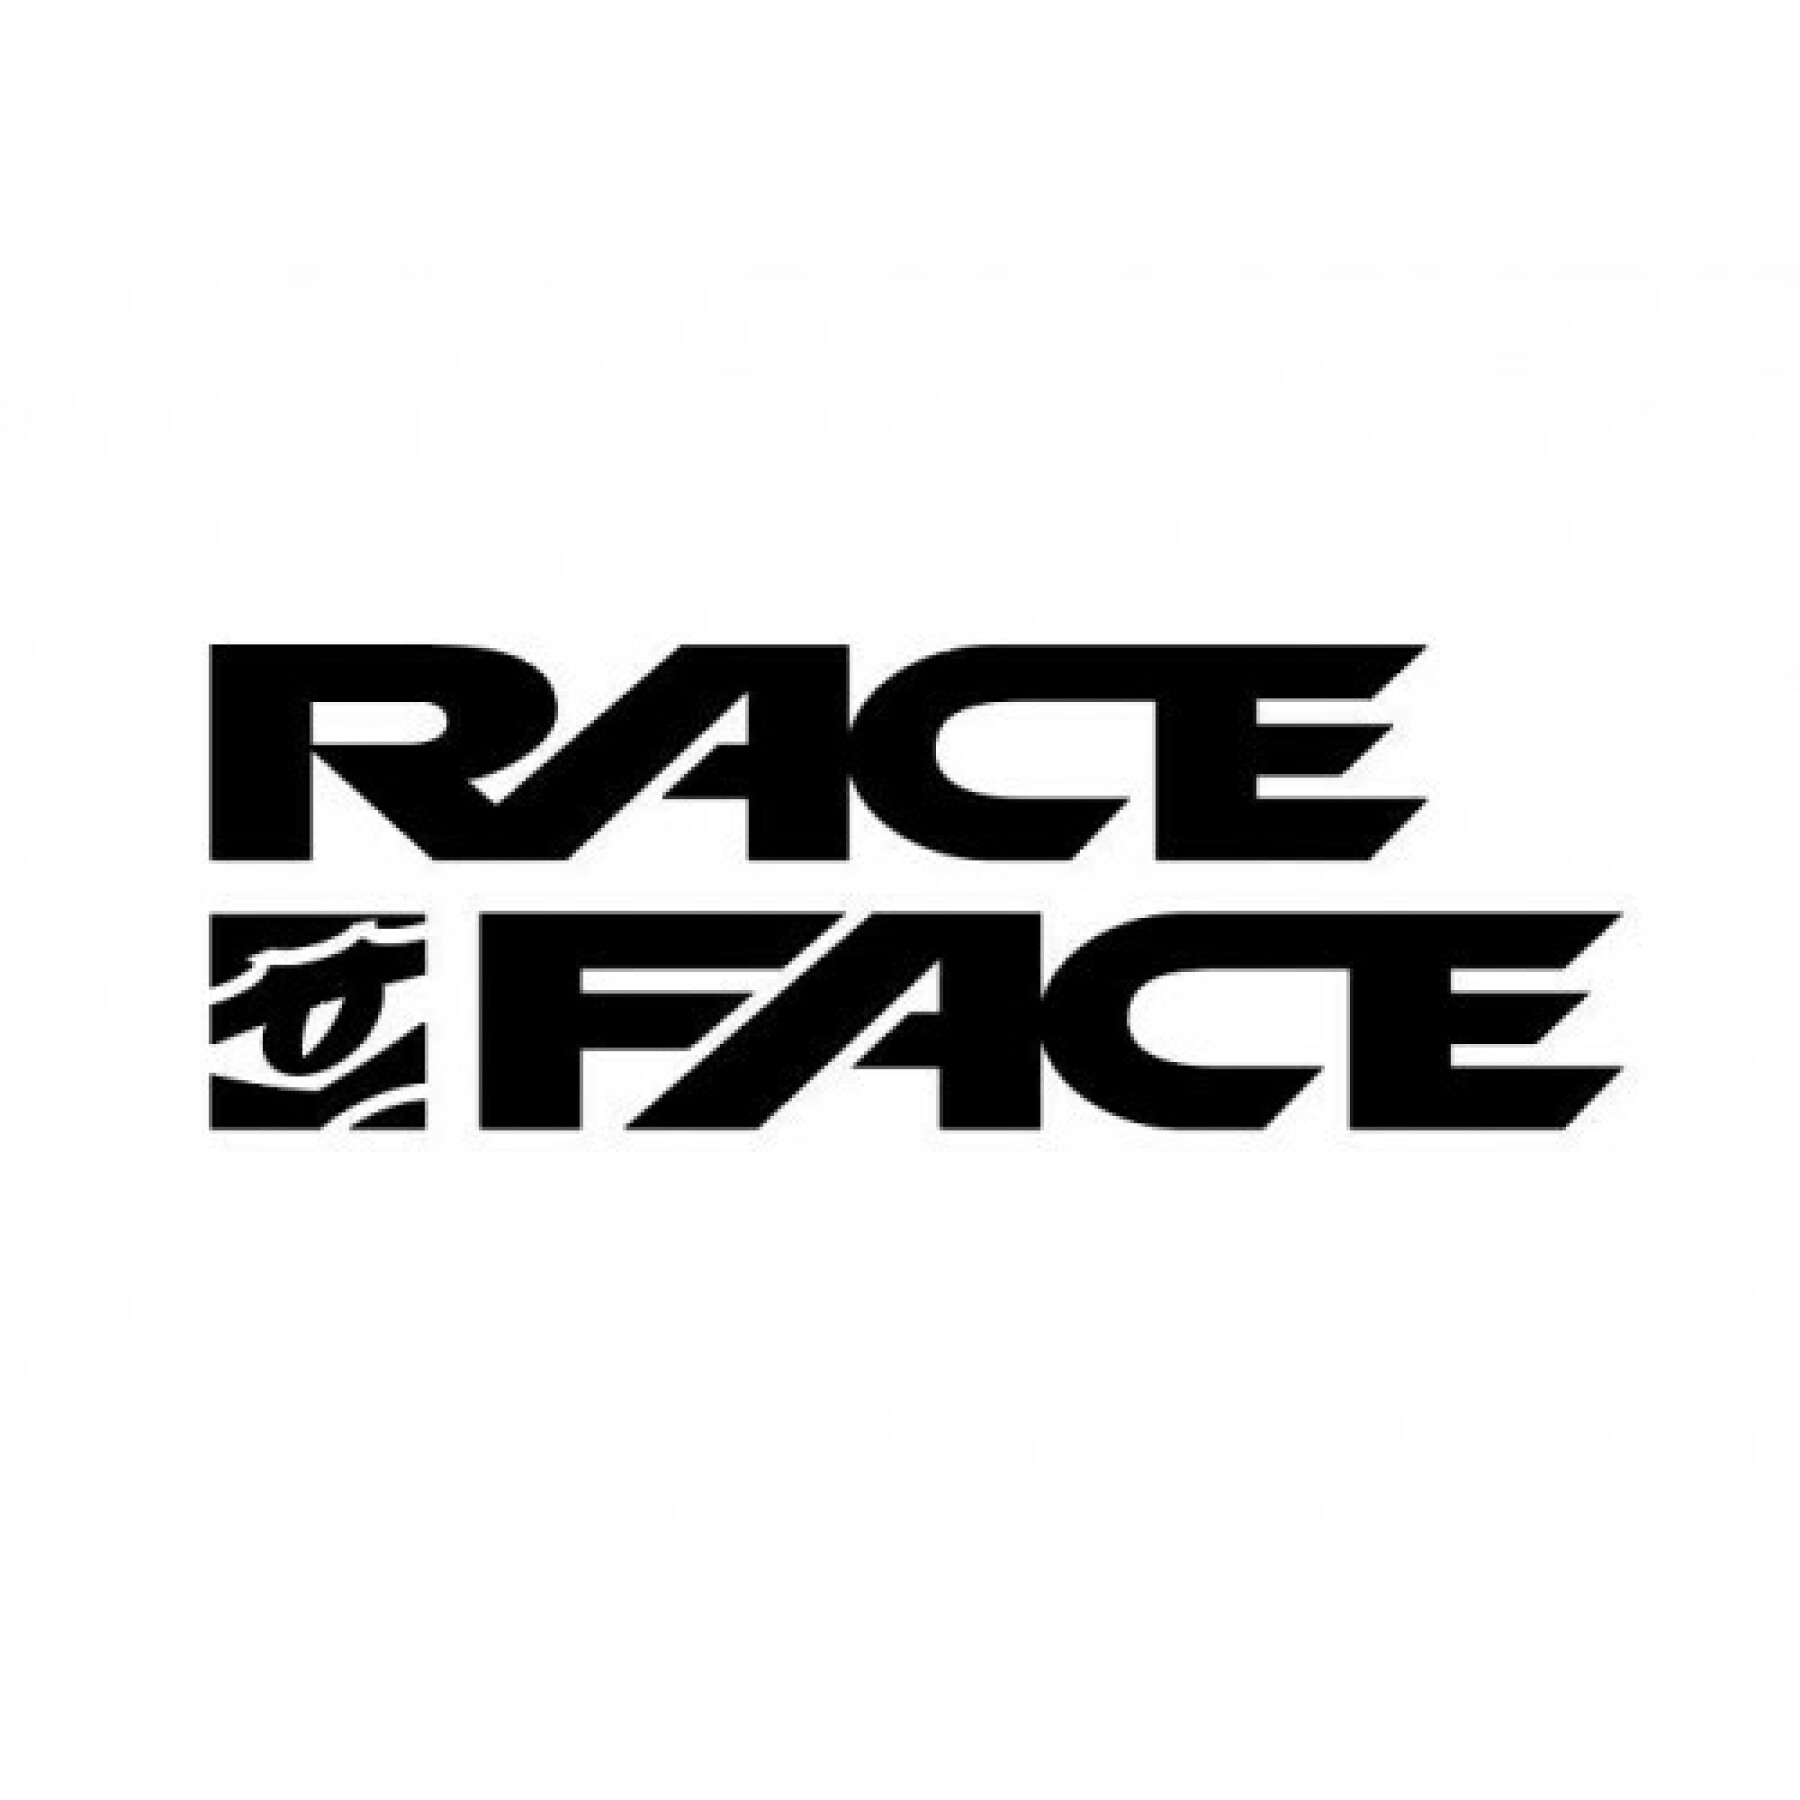 Felge Race Face arc offset - 30 - 27.5 - 28t